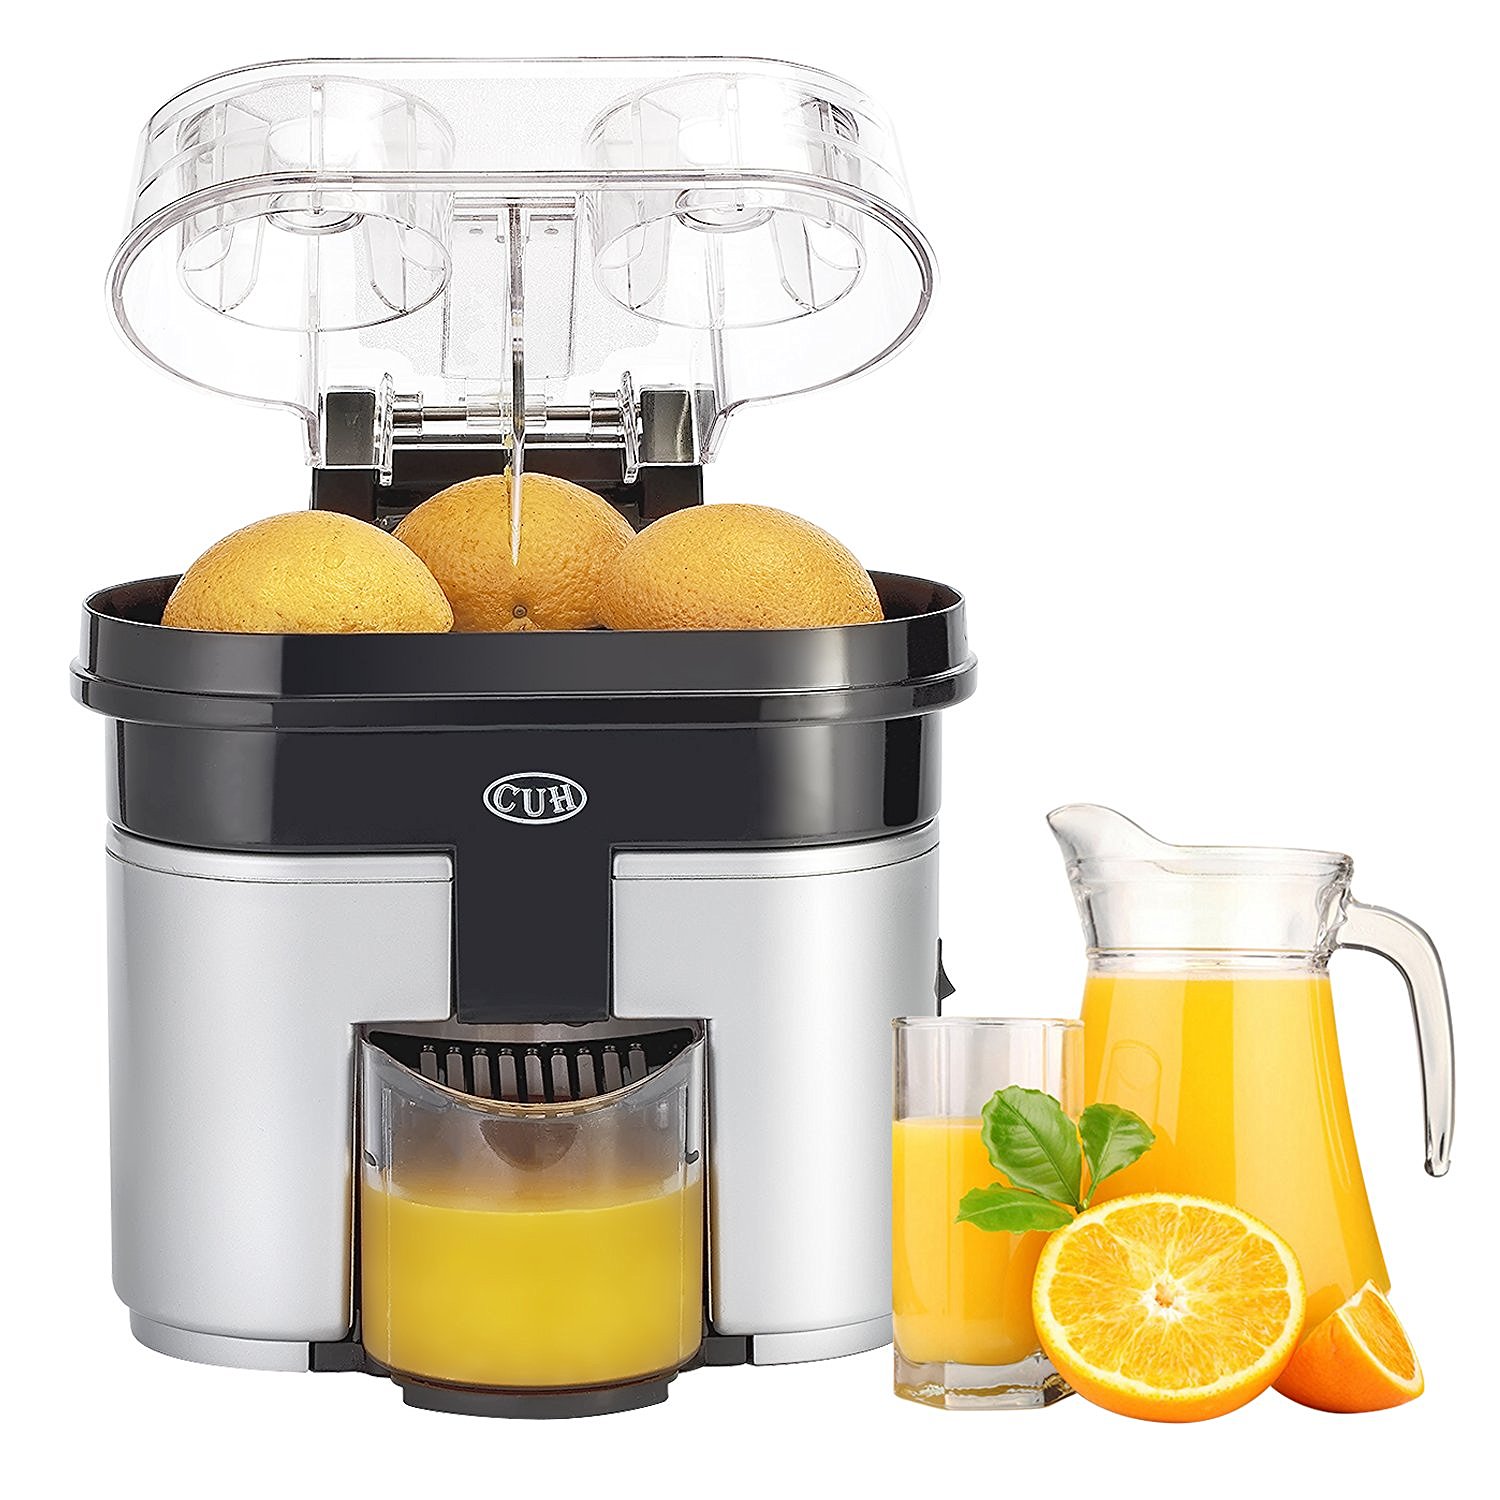 How To Make Orange Juice In A Juicer | Storables